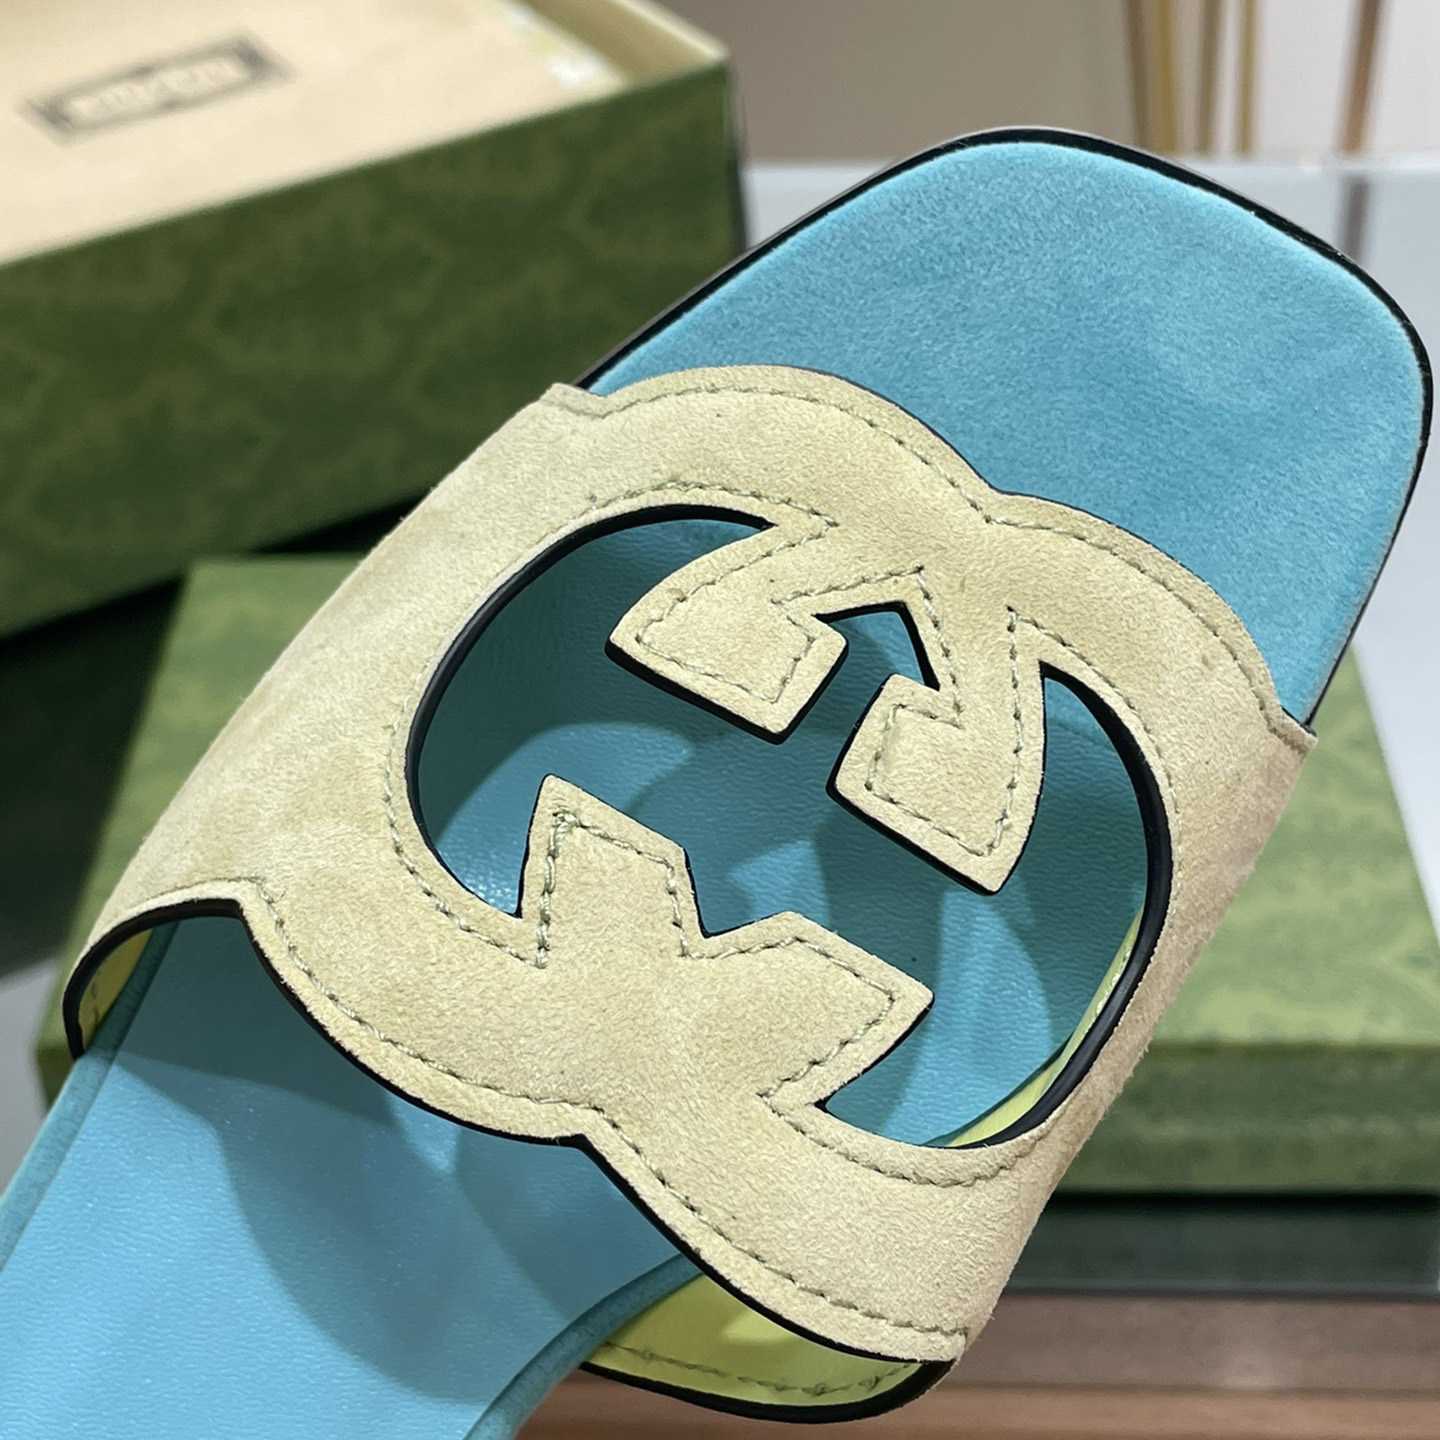 Gucci Women's Interlocking G Cut-out Slide Sandal - DesignerGu